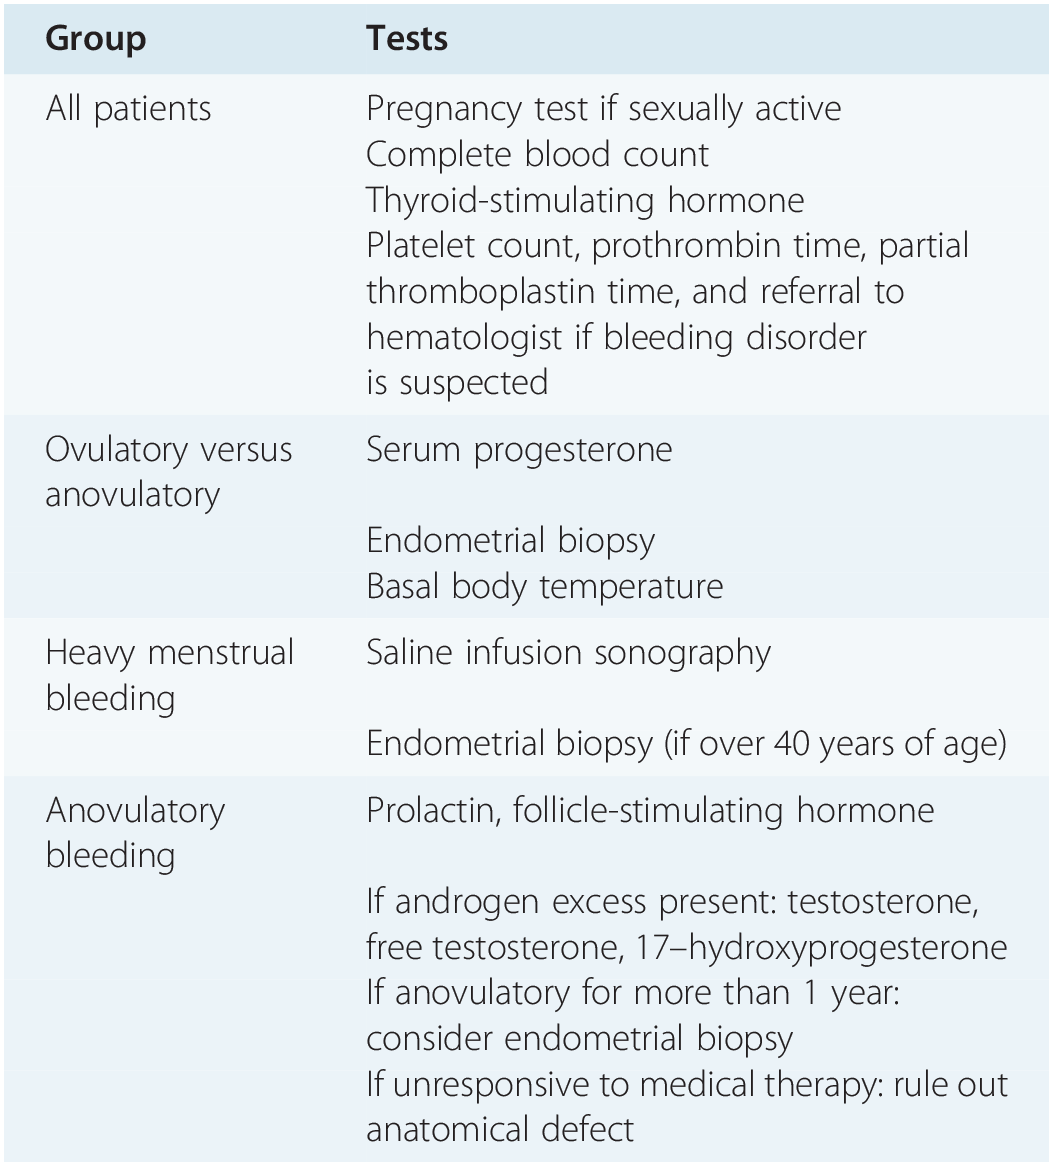 Abnormal uterine bleeding (Chapter 9) - Clinical Gynecology